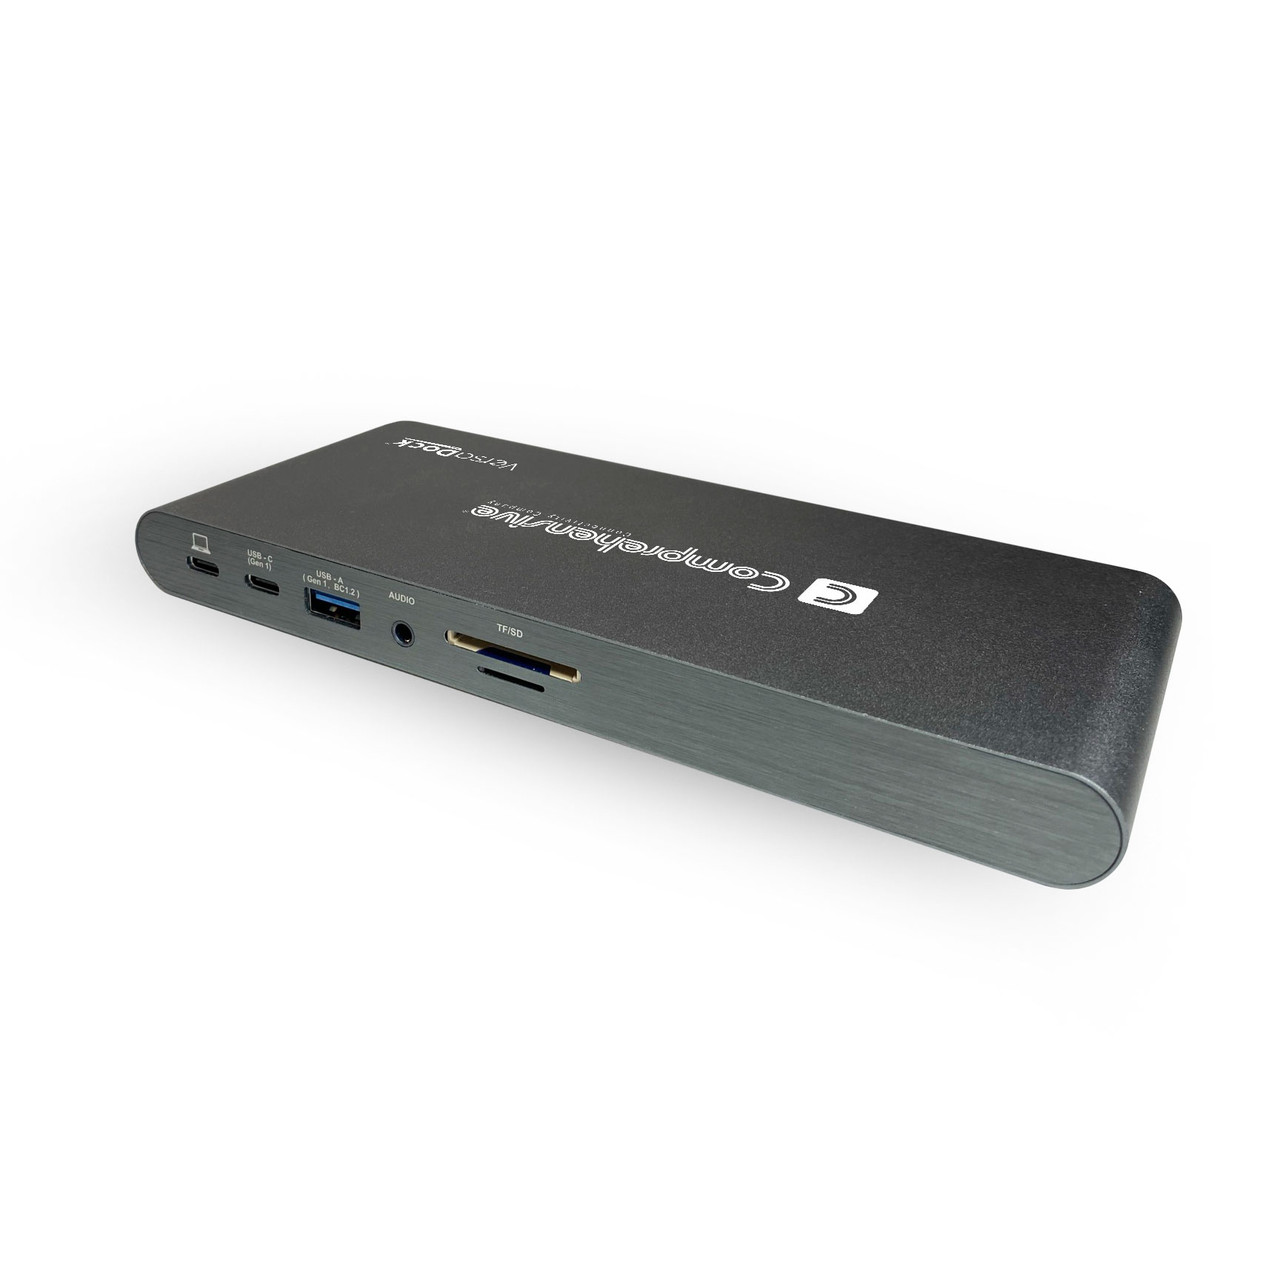 Keyboard and USB-C Hub for Mac Android Windows Triple Display 4K HDMI SD  Card